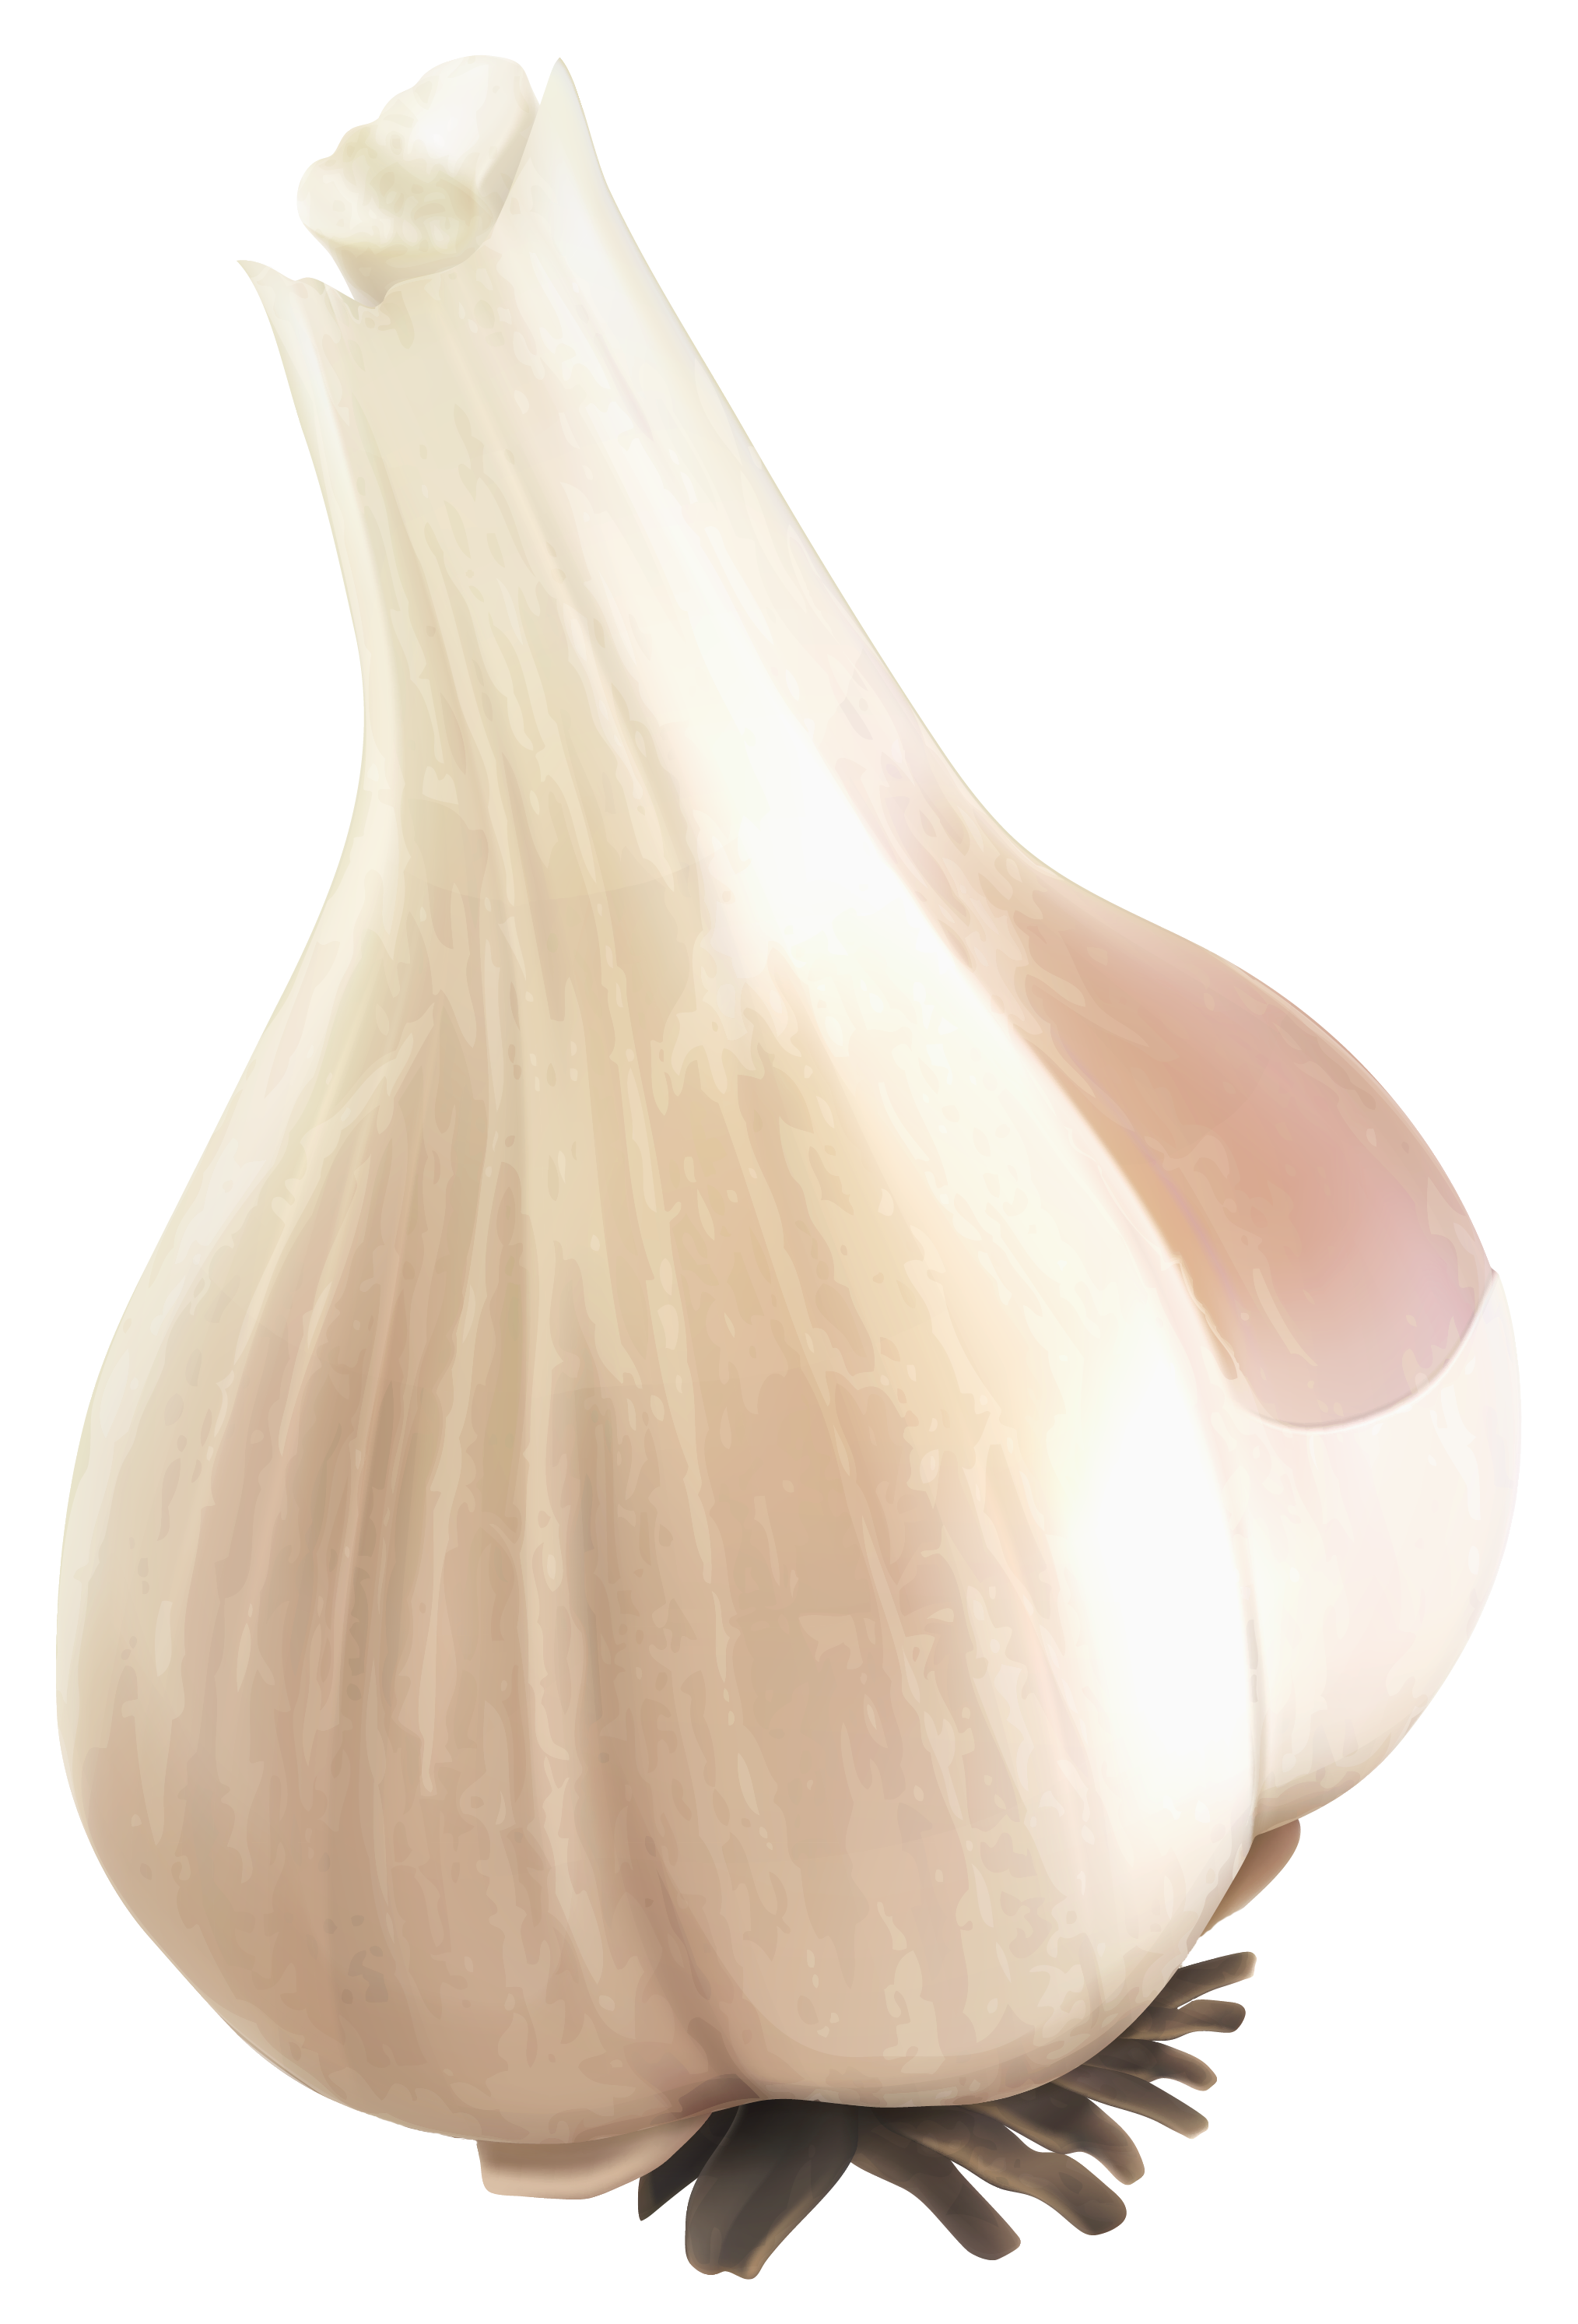 Garlic PNG Photo Image